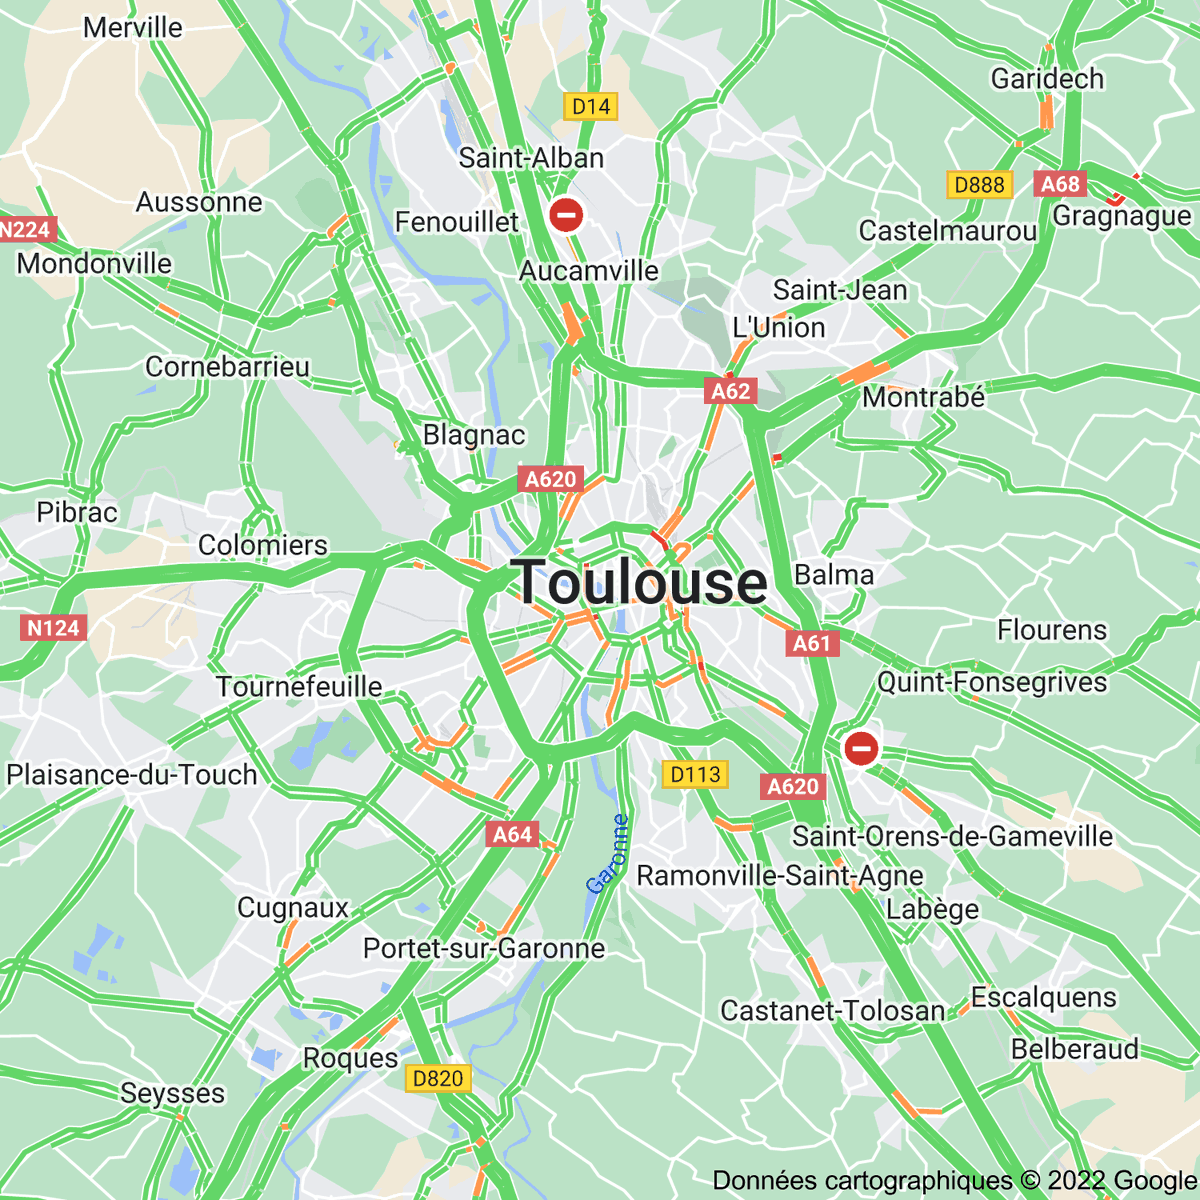 [FLASH 14:00] Trafic à Toulouse toulousetrafic.com #Toulouse #ToulousePeriph #InfoTrafic